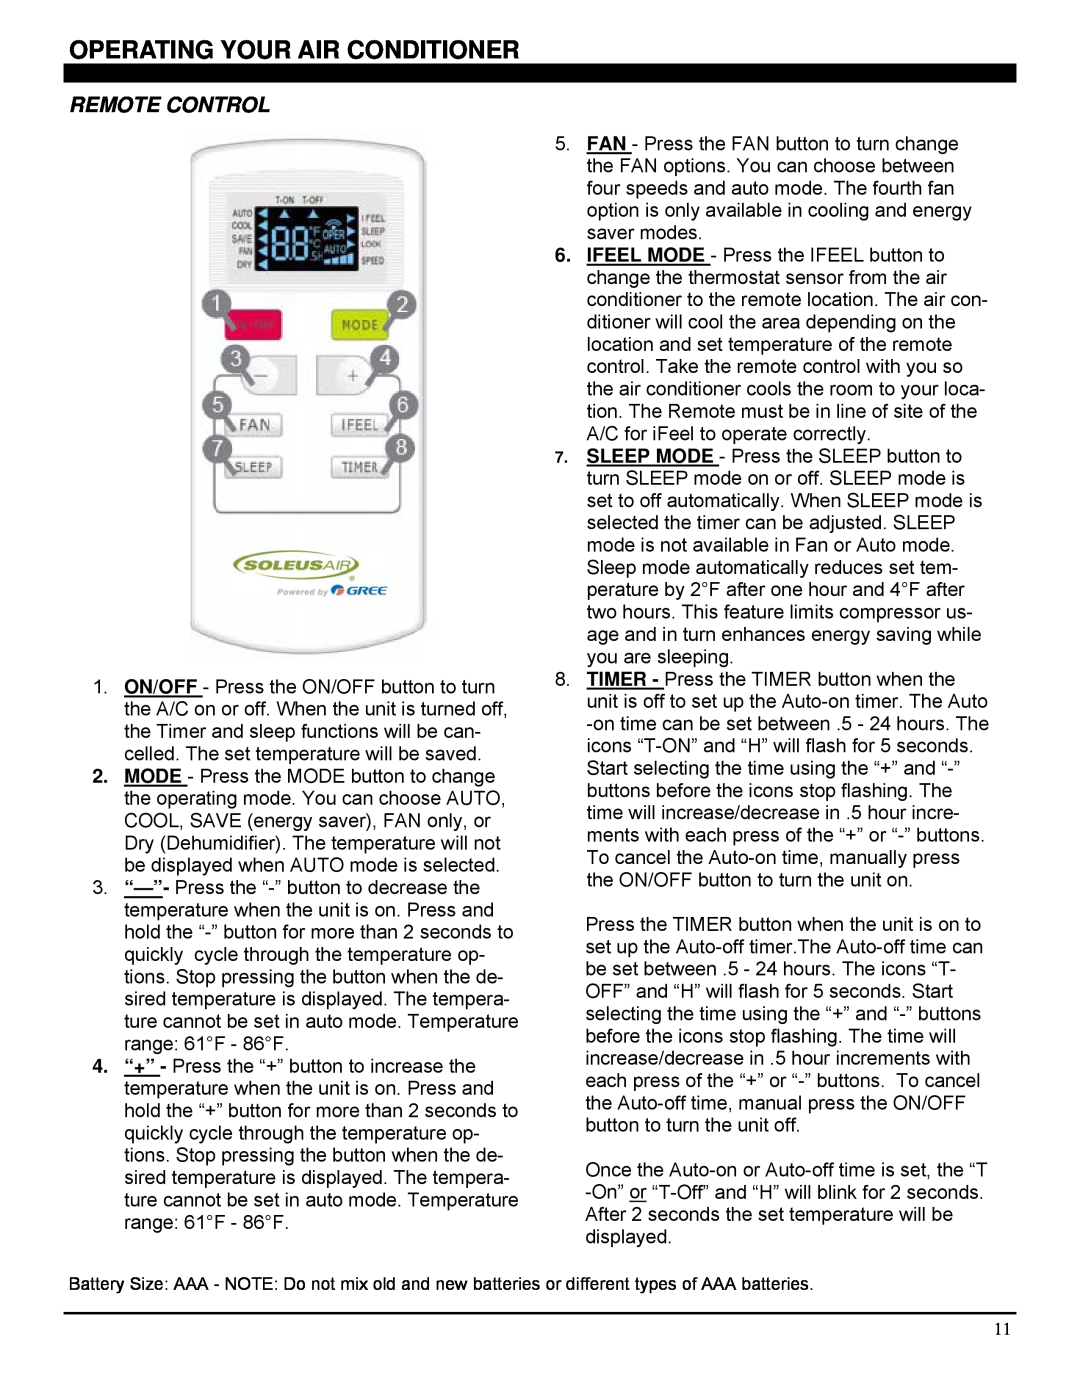 Soleus Air SG-WAC-10ESE-F, SG-WAC-12ESE-F manual Operating Your Air Conditioner, Remote Control 